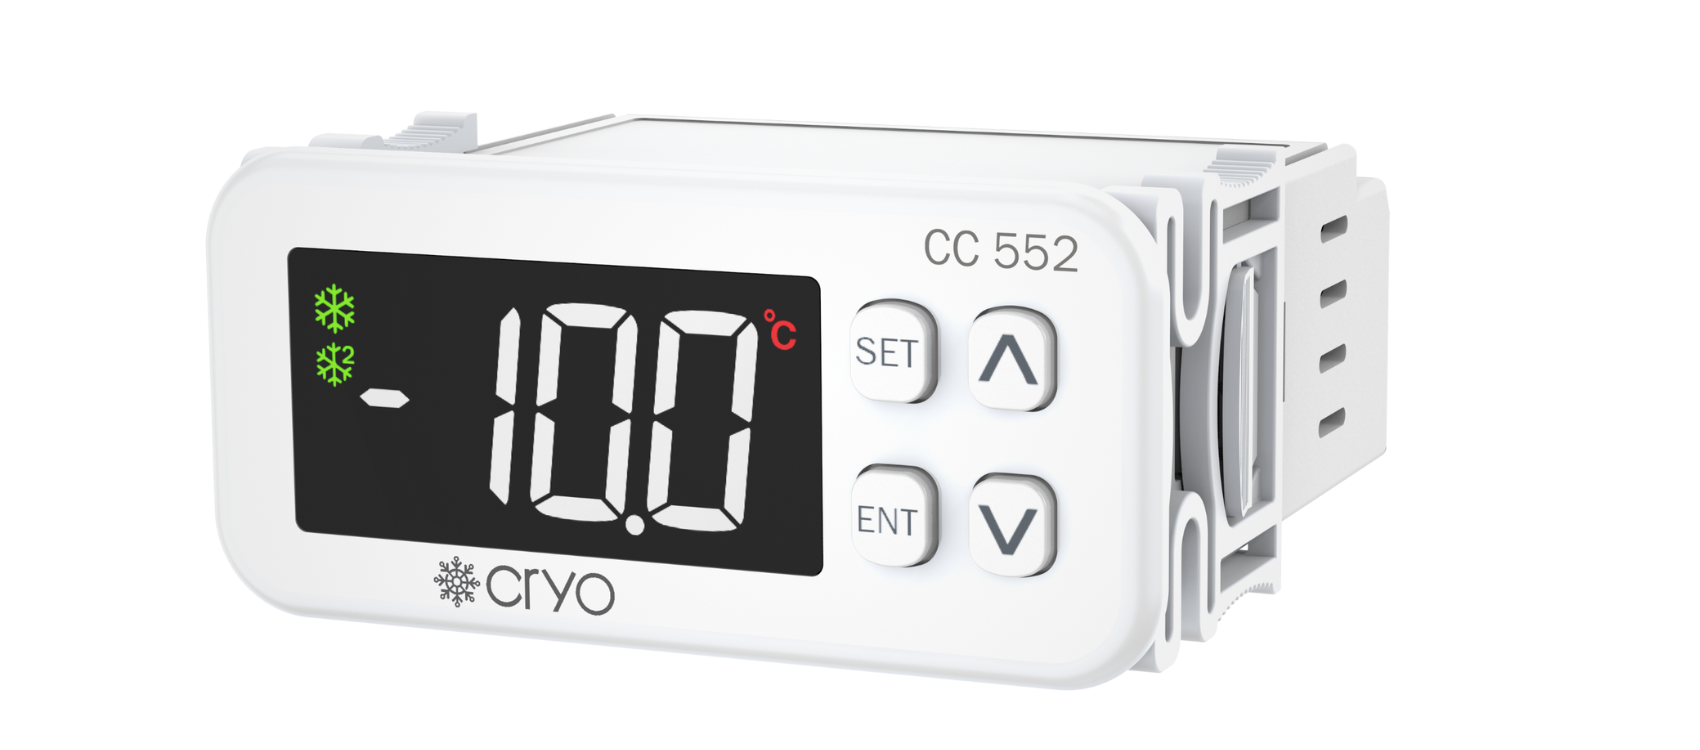 CC-552 Cryo Dual Compressor Output - product image